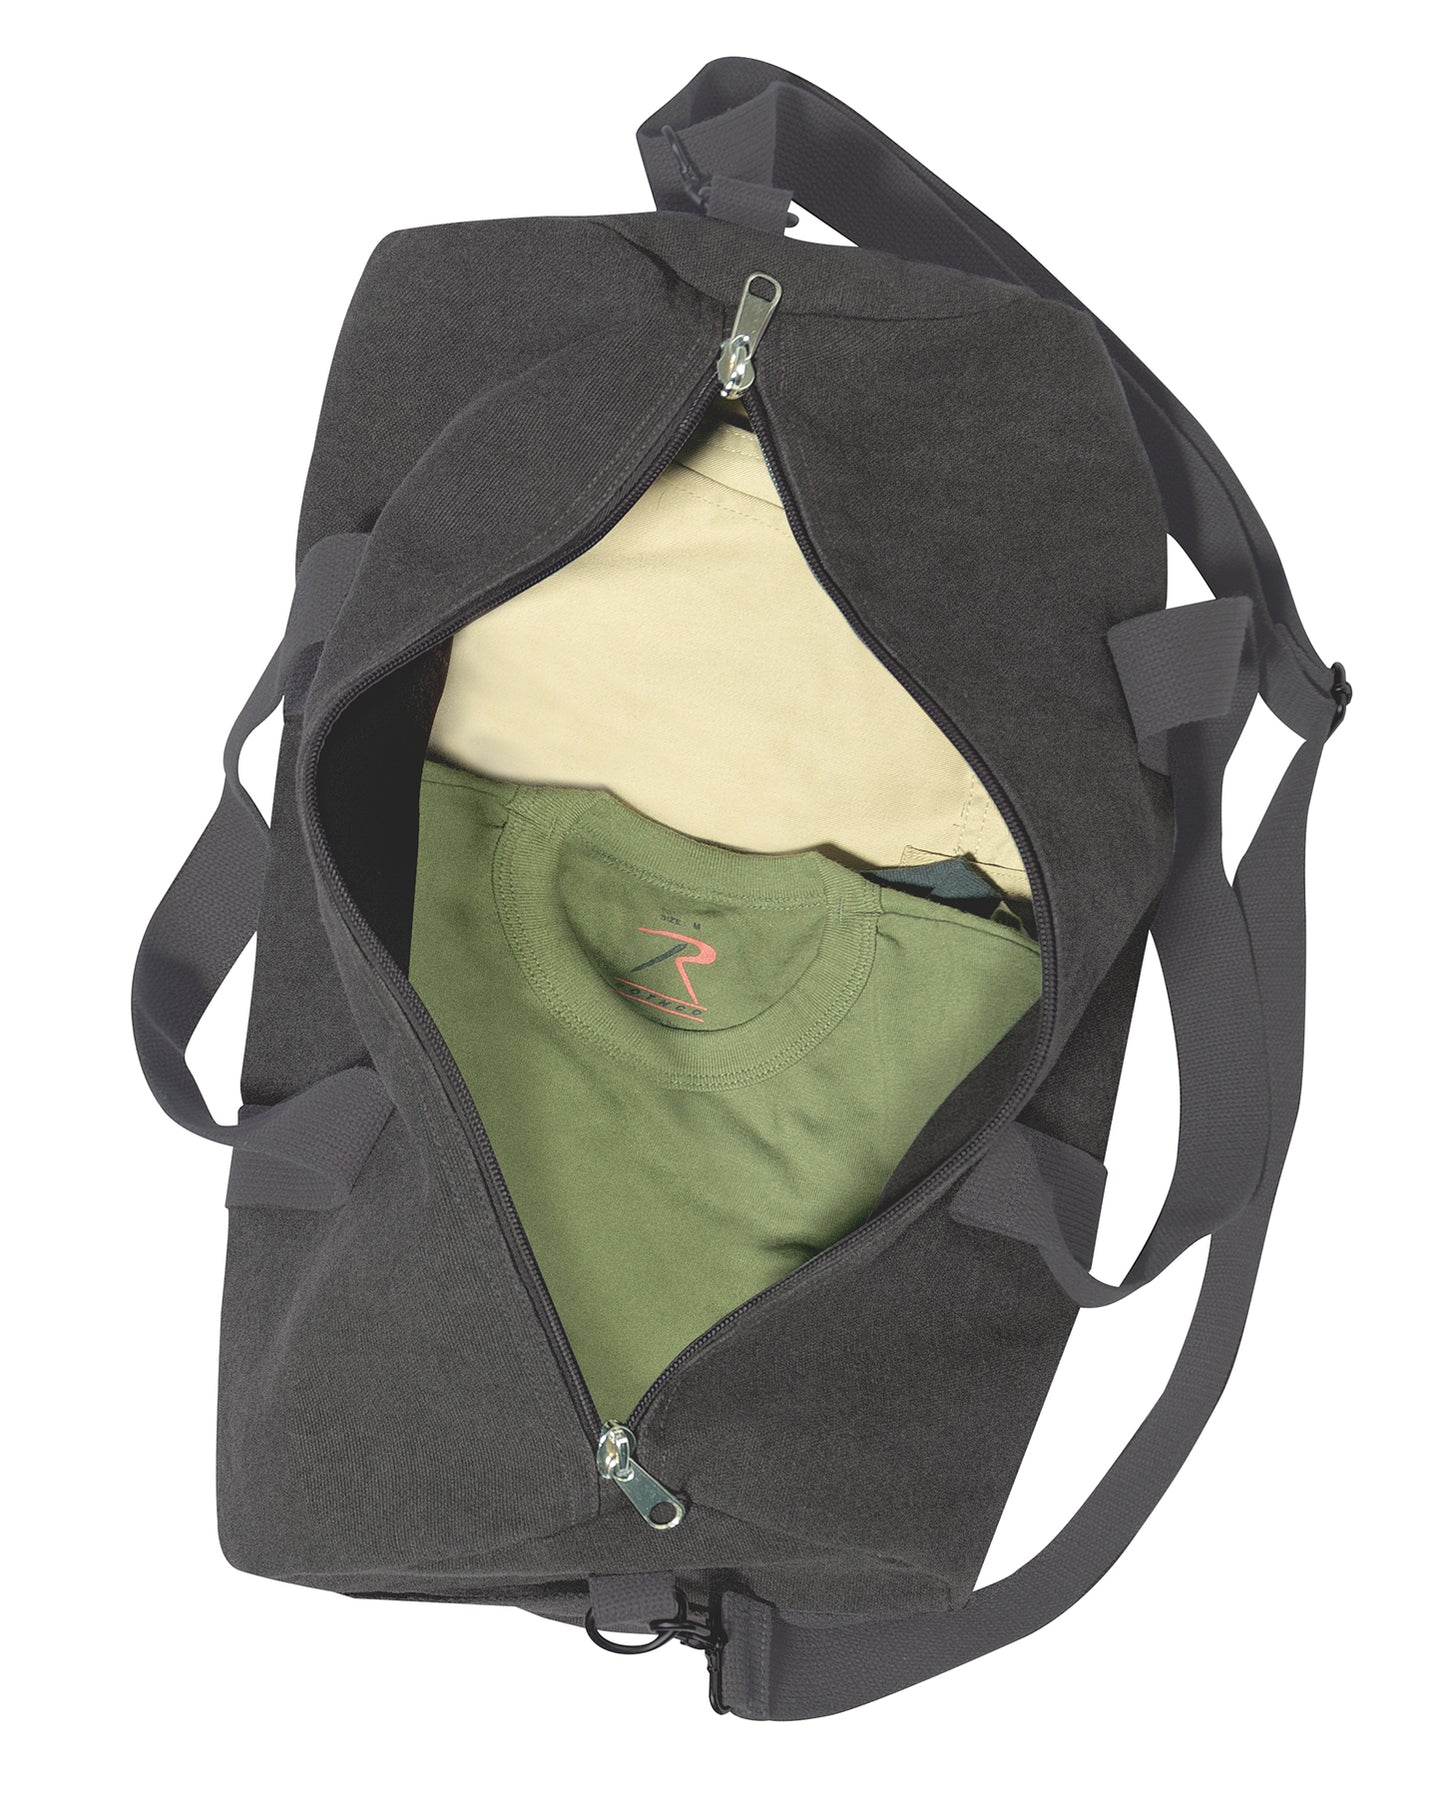 Milspec Canvas Shoulder Duffle Bag - 19 Inch Gifts For Him MilTac Tactical Military Outdoor Gear Australia